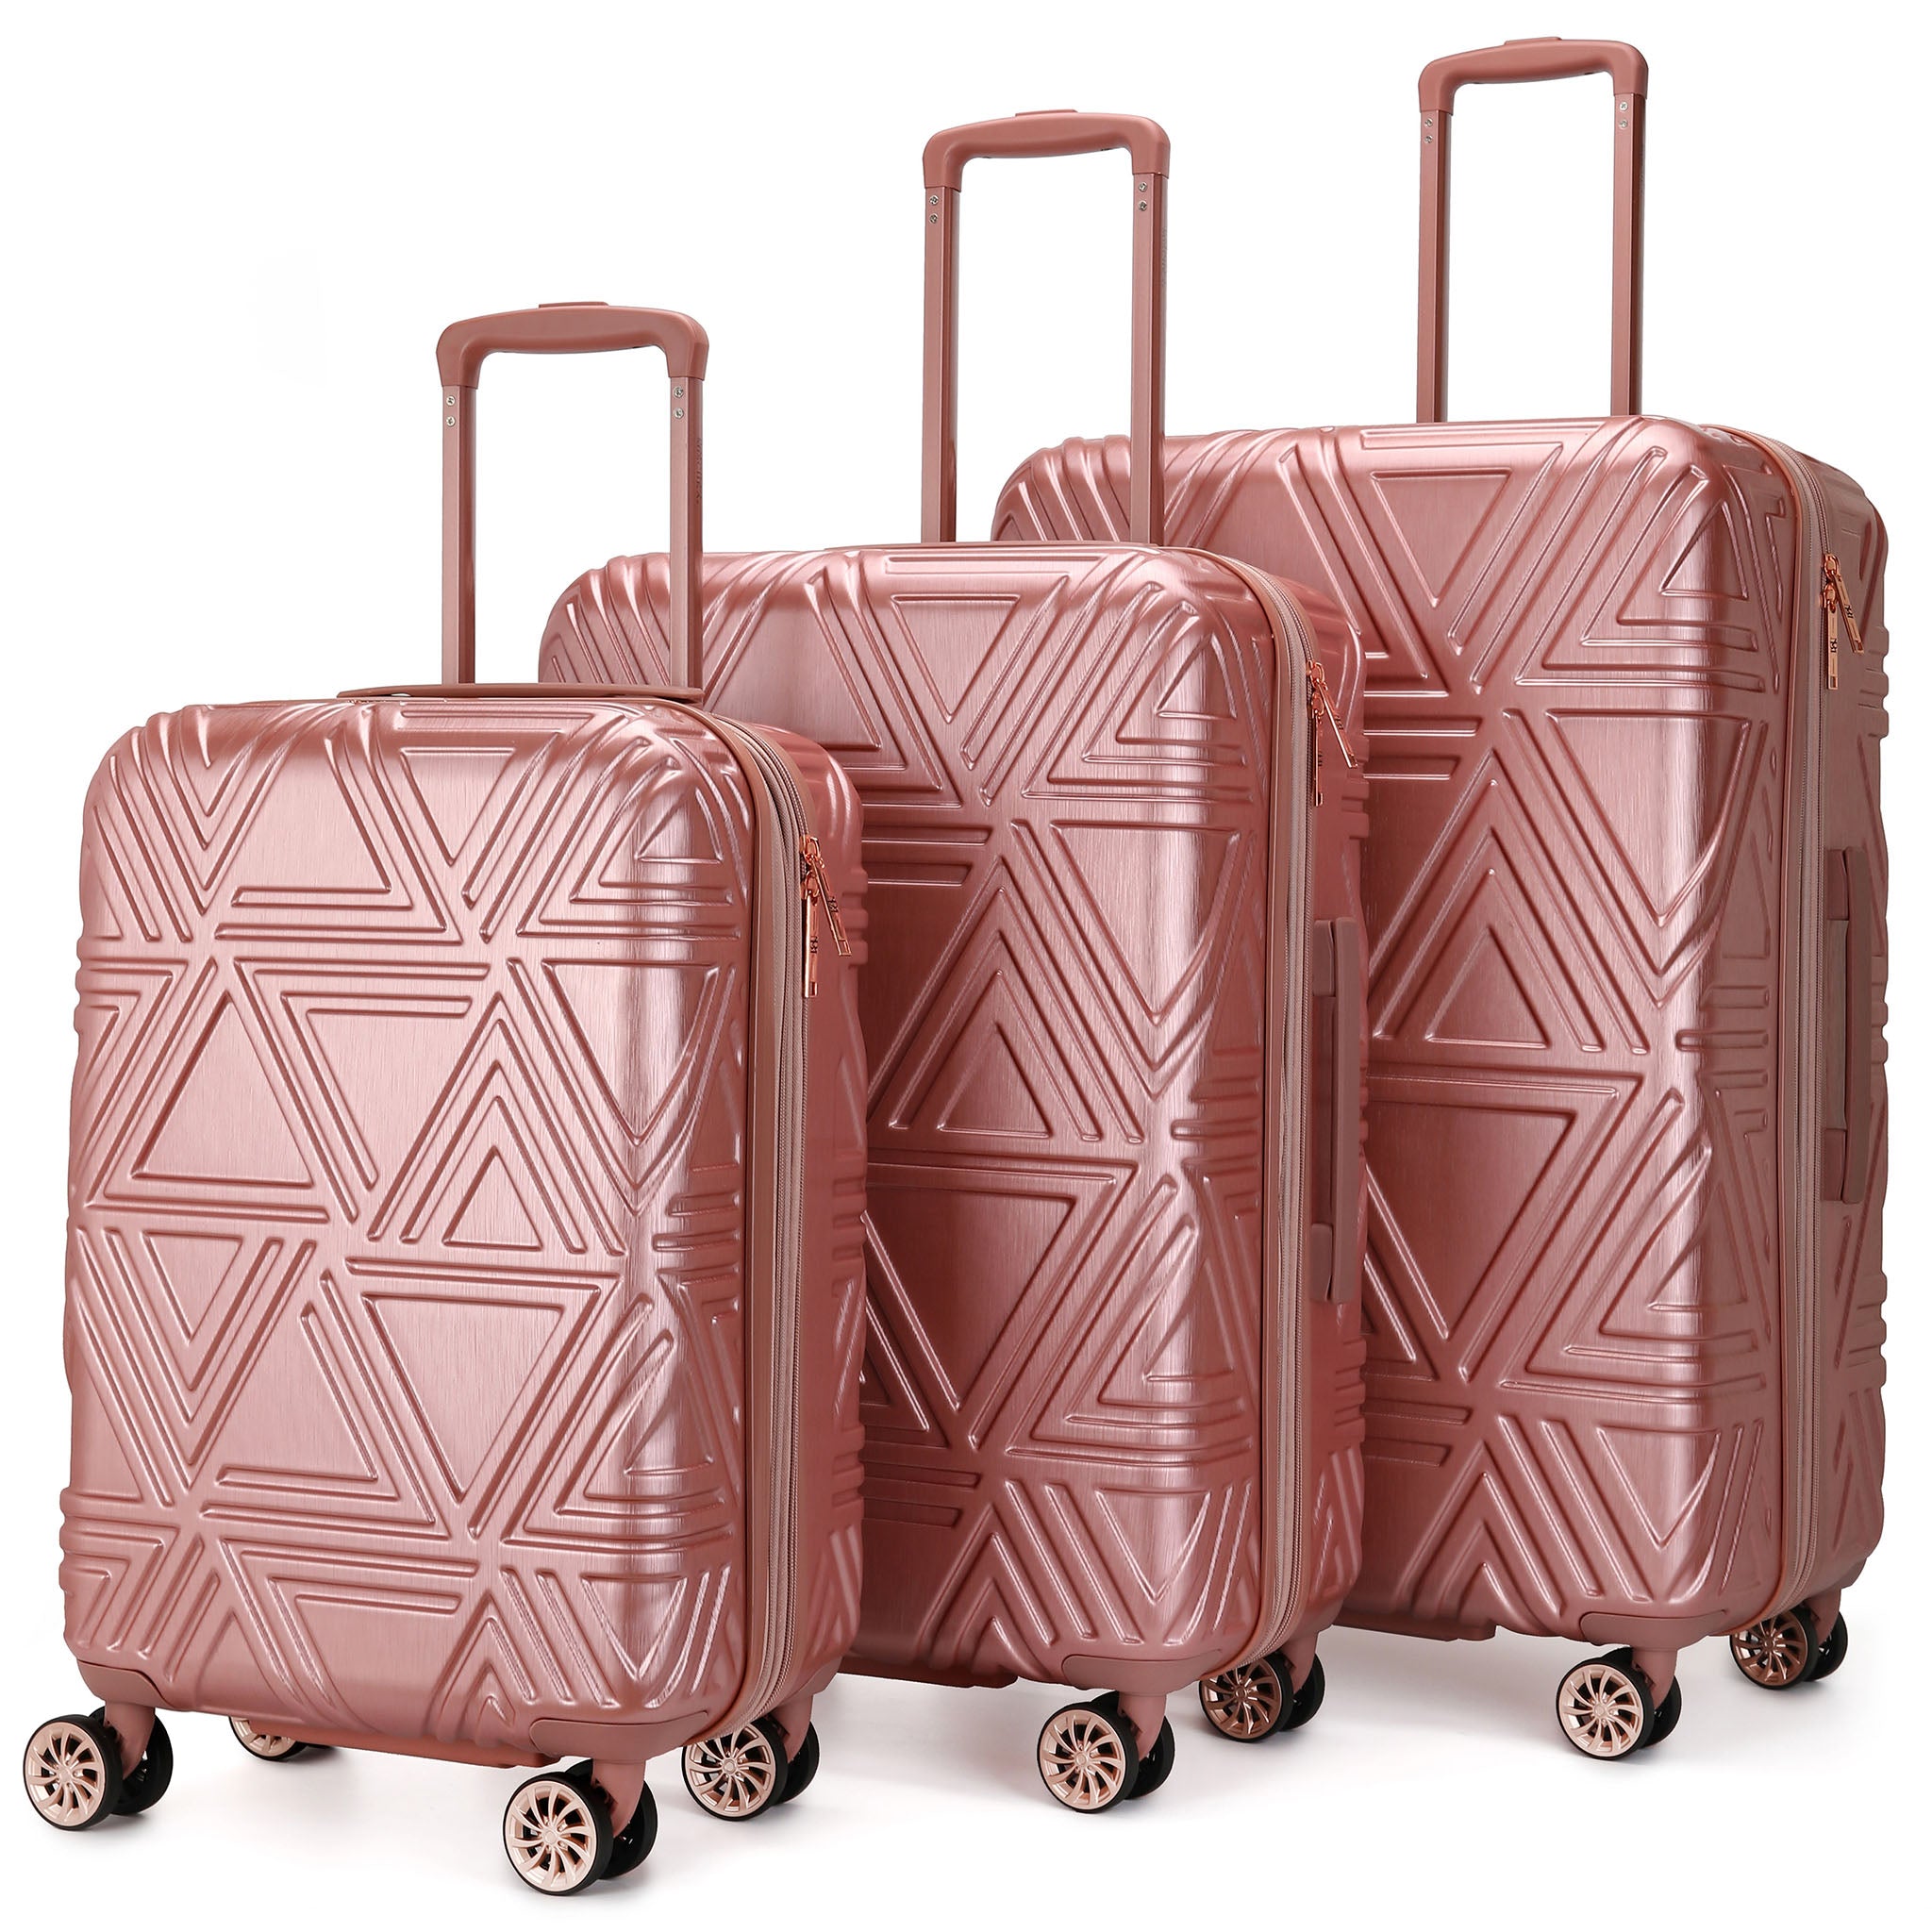 Badgley Mischka Essence 3 Piece Expandable Luggage Set - Leopard